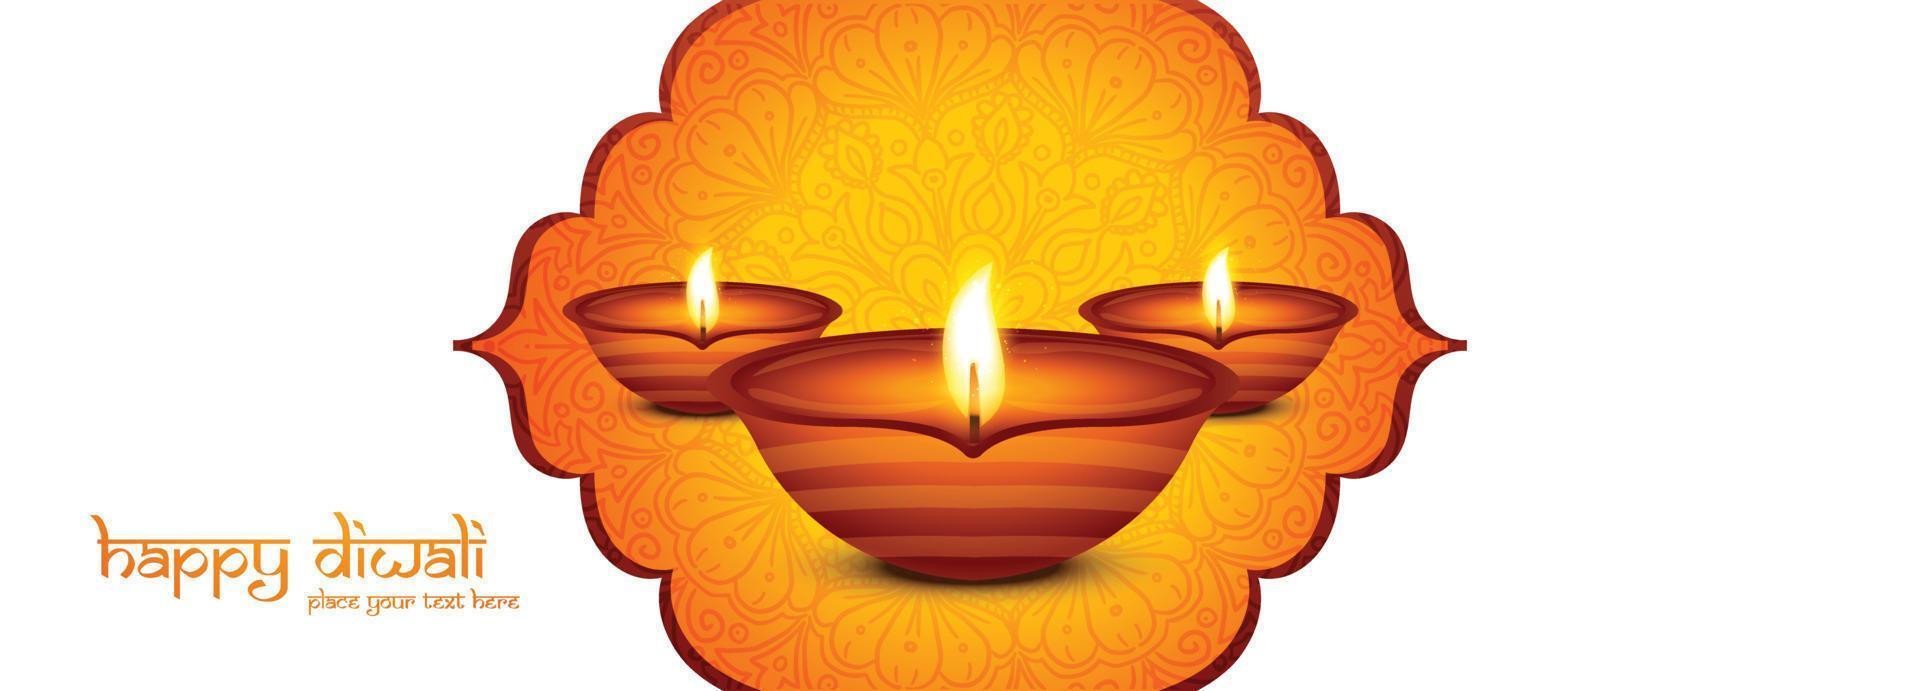 Happy diwali festival of light with oil lamp celebration banner background vector